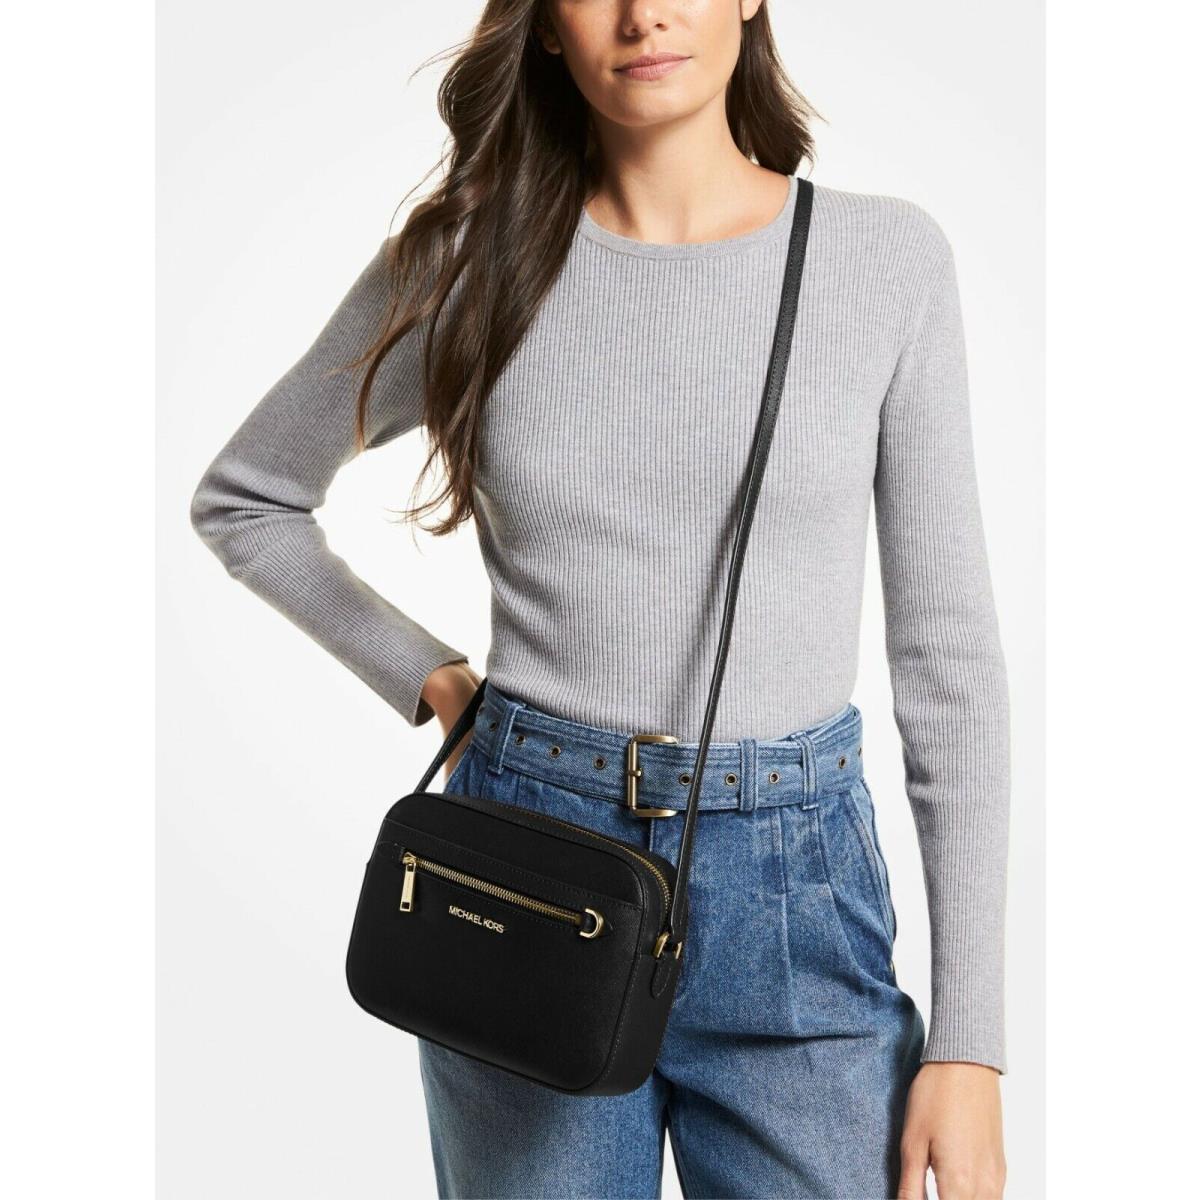 Michael Kors Women Leather Crossbody Bag Handbag Messenger Shoulder Purse  Black 194900274316